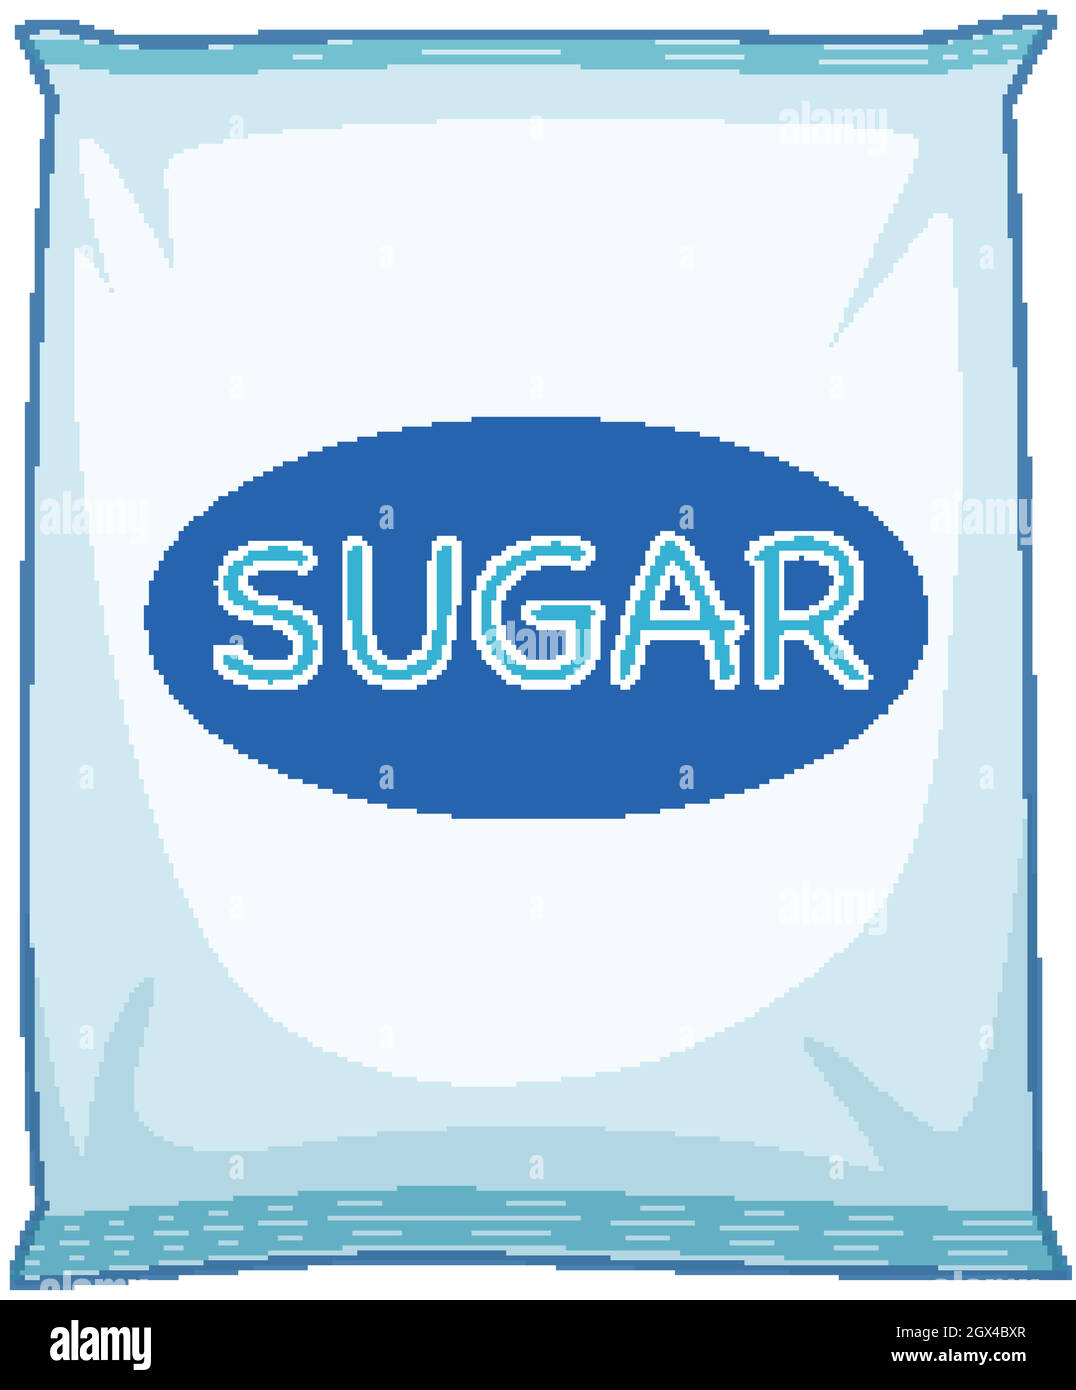 Pacco di zucchero Immagini Vettoriali Stock - Alamy